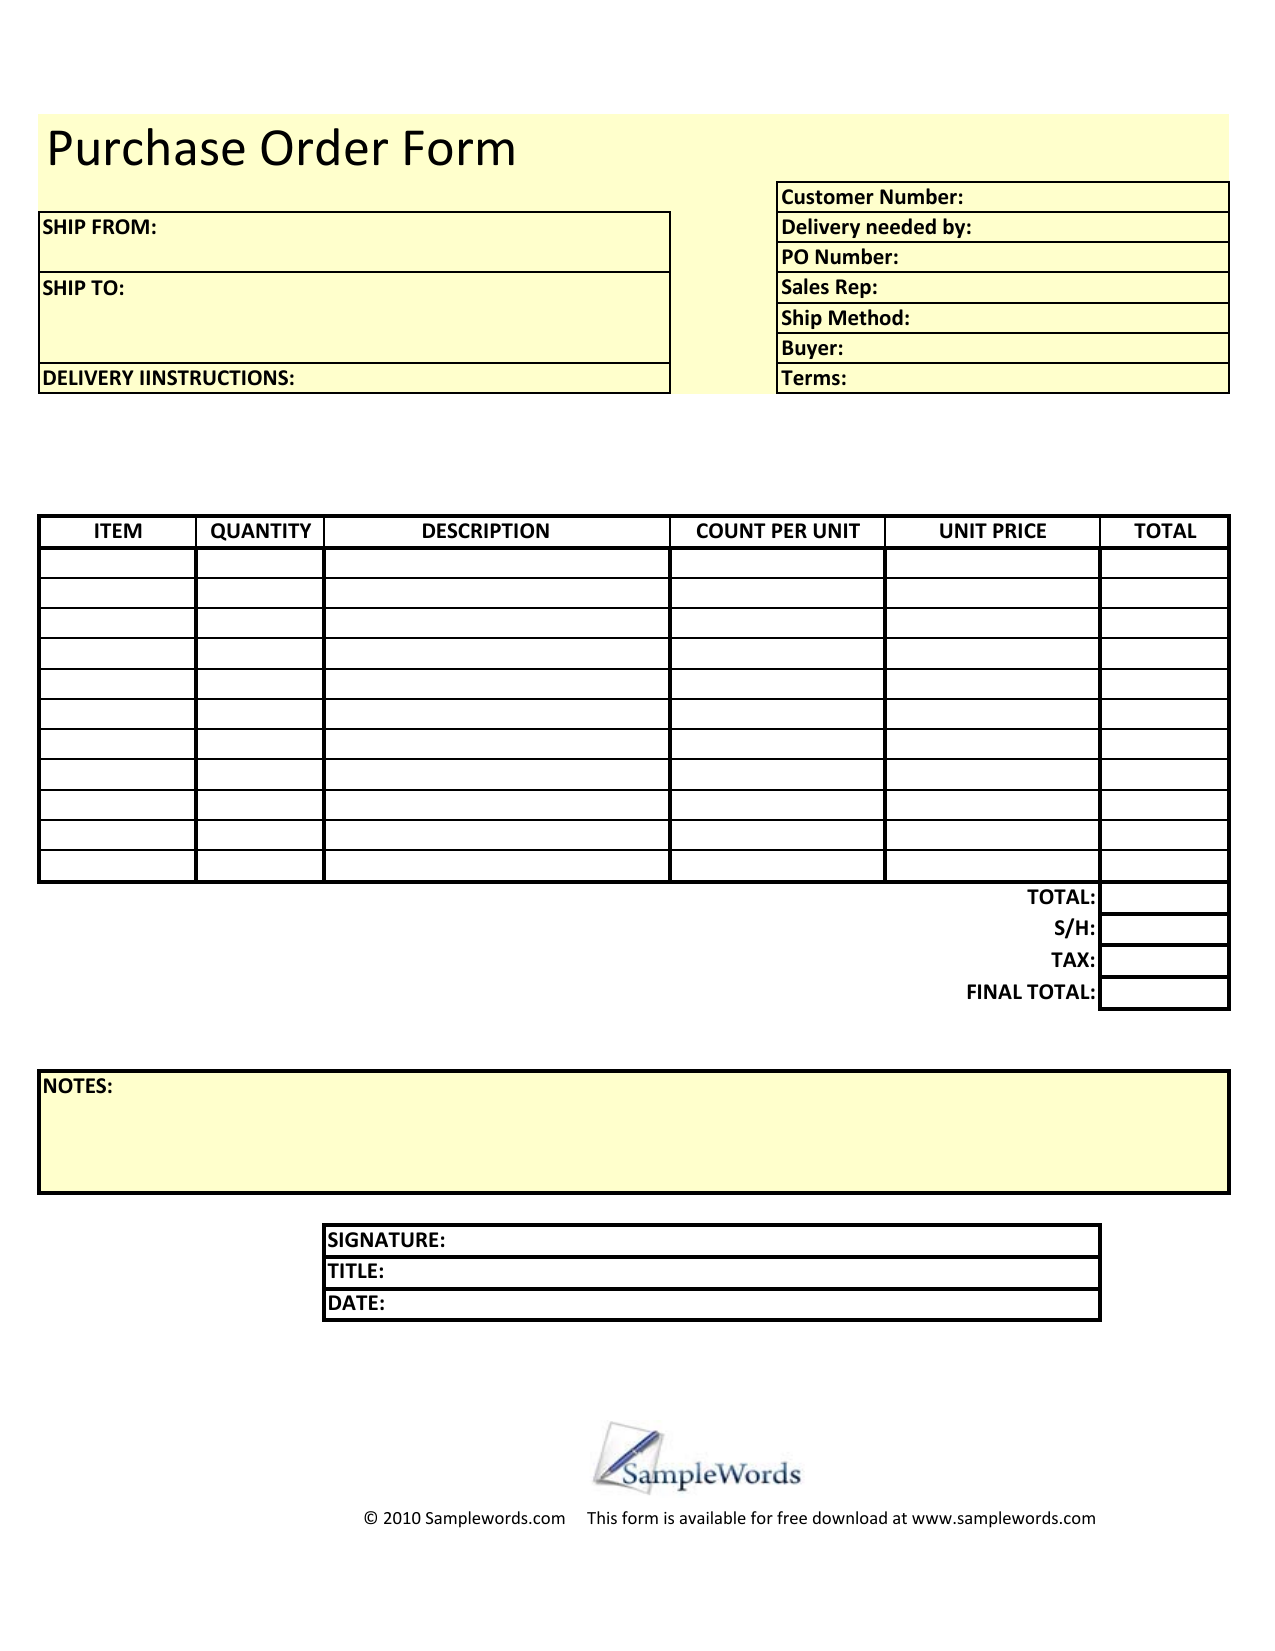 generic-work-order-form-printable-download-blank-purchase-order-form